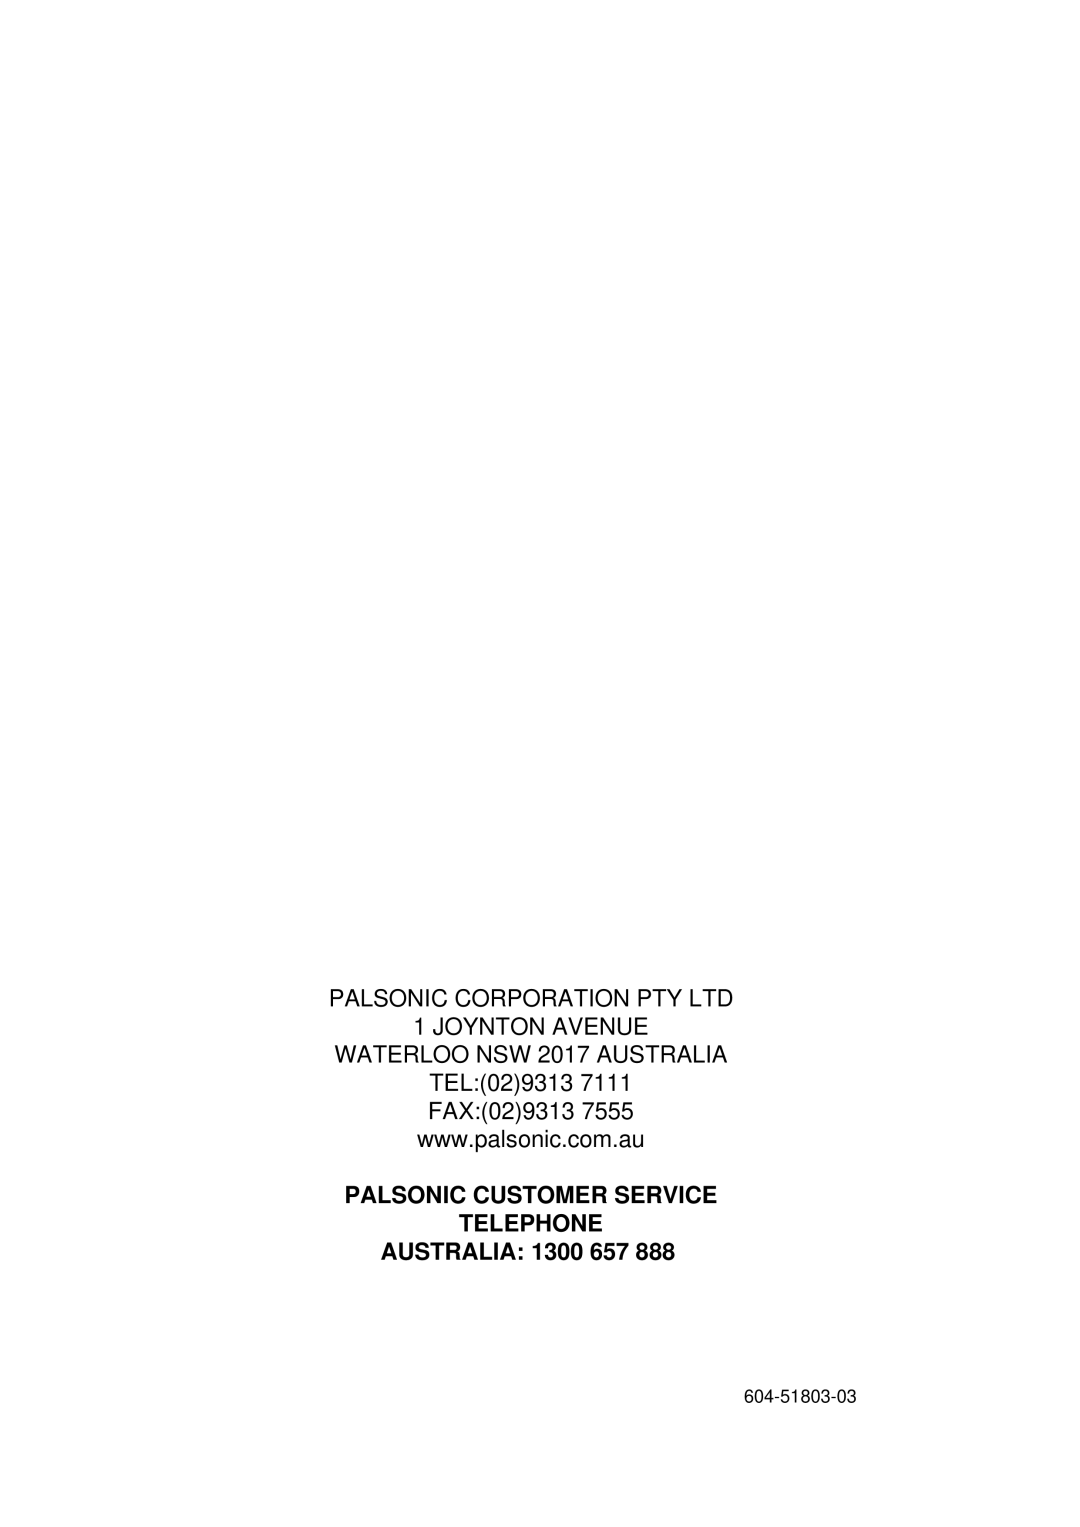 Palsonic 4910 PALSONIC CUSTOMER SERVICE TELEPHONE AUSTRALIA 1300 657, JOYNTON AVENUE WATERLOO NSW 2017 AUSTRALIA TEL029313 